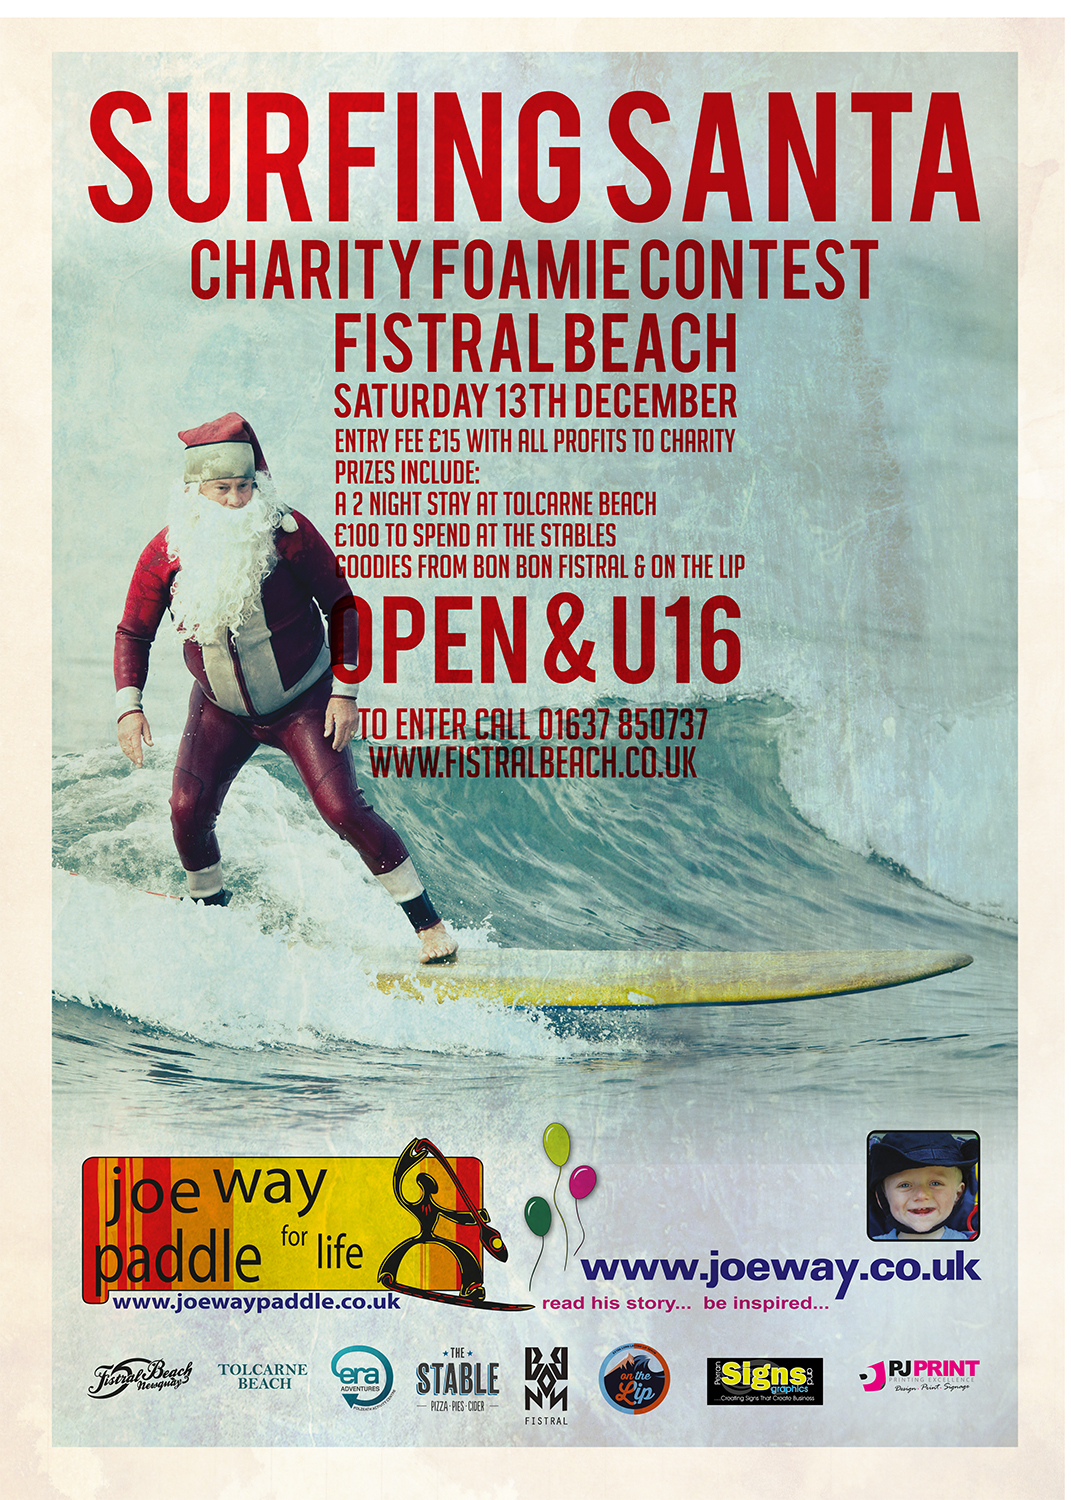 Surfing Santa Fistral Beach - Saturday 13th December 2014